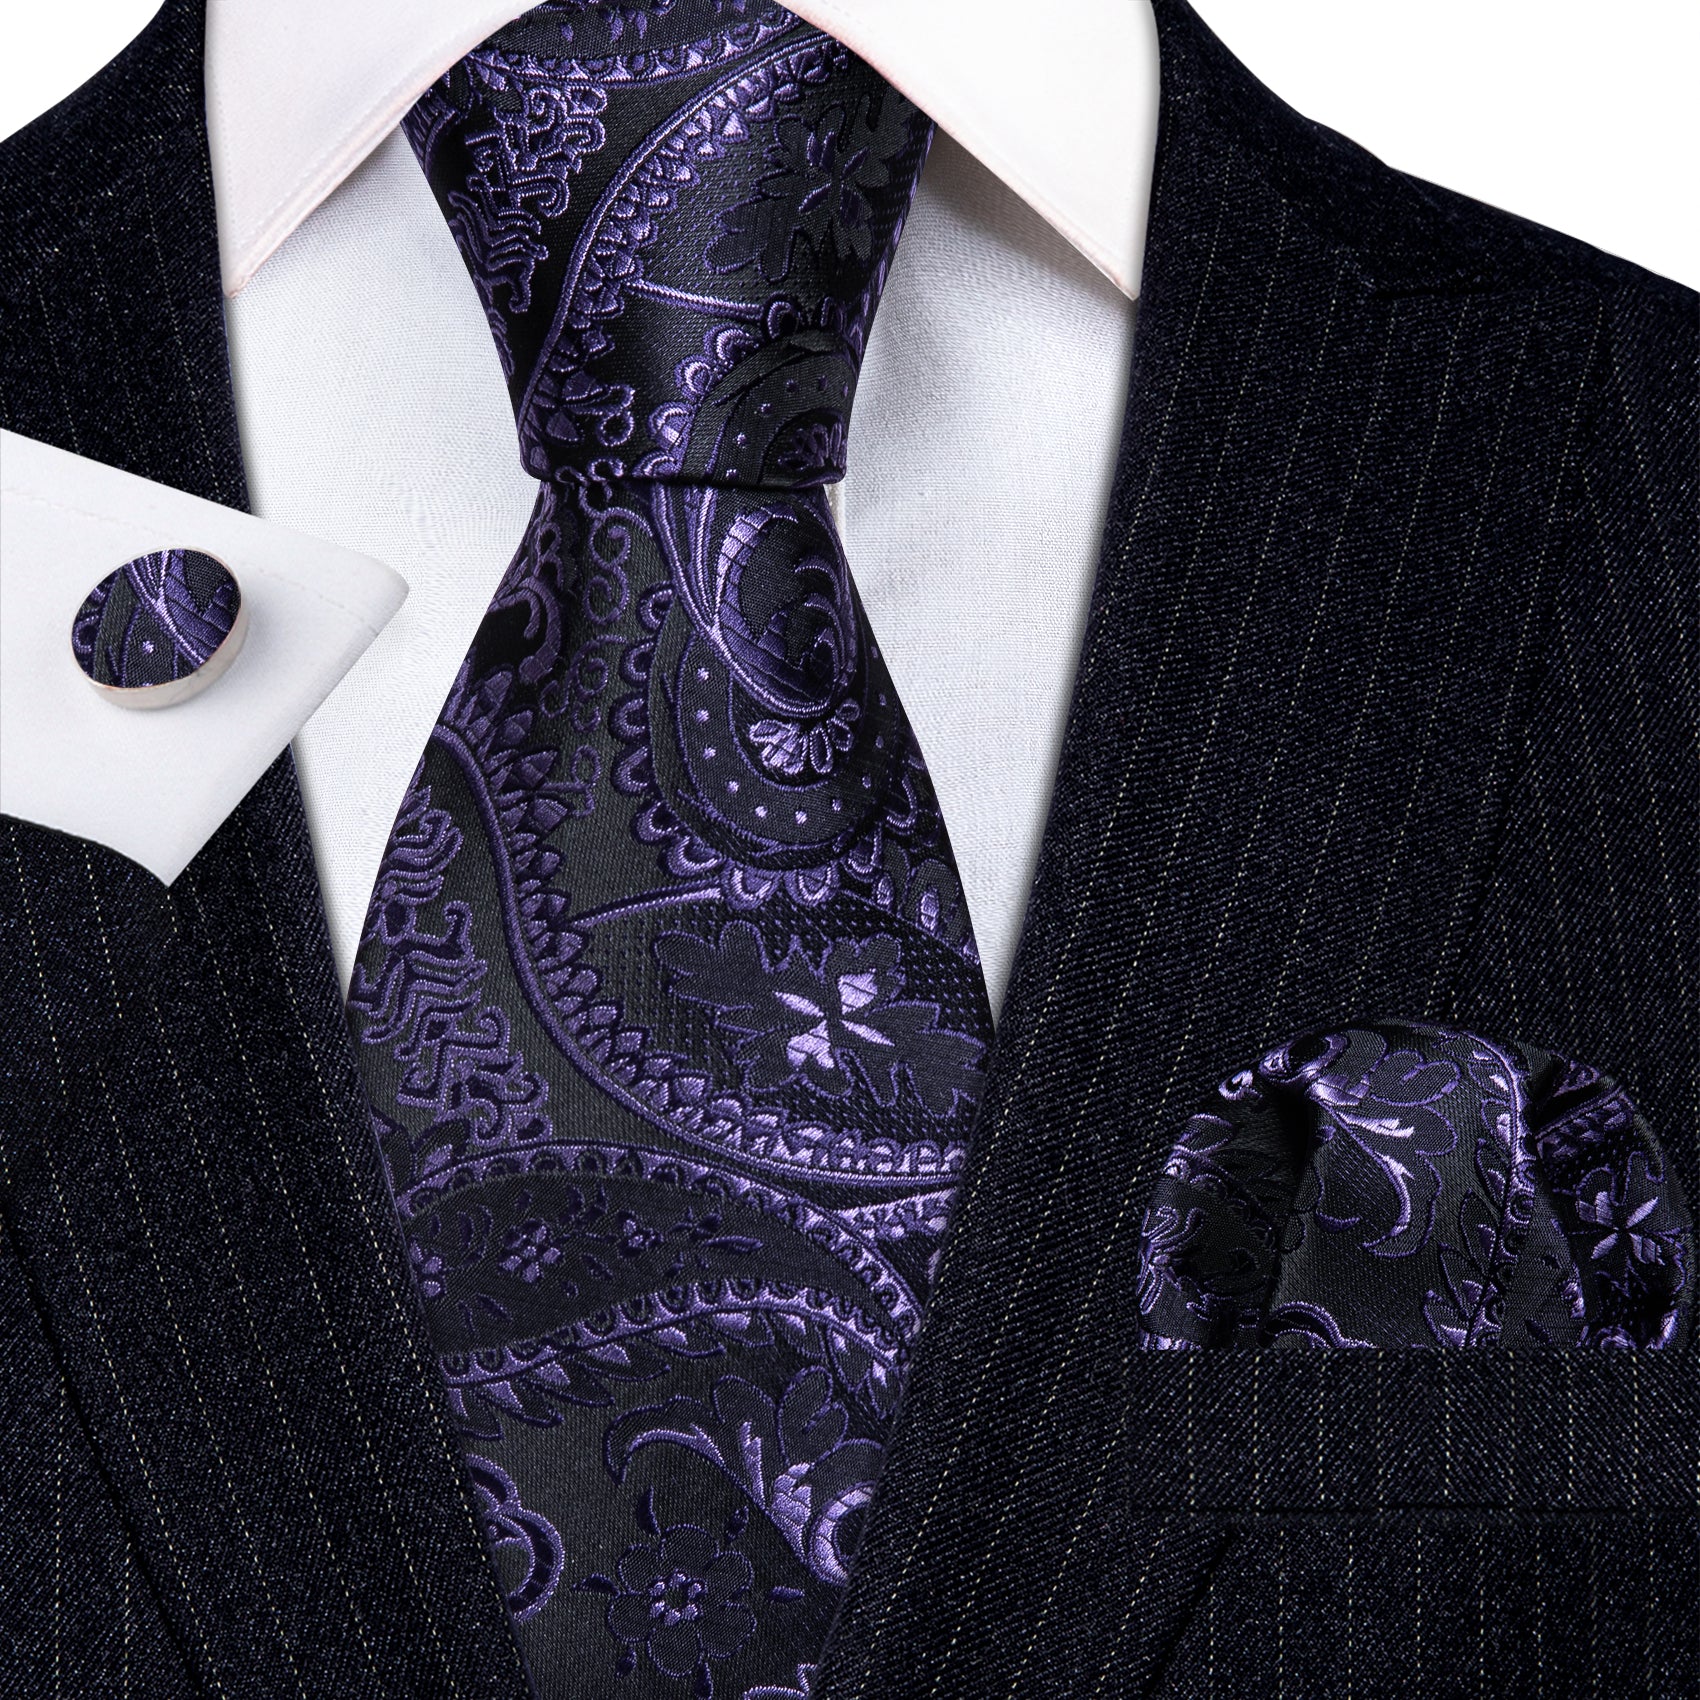 black tie with pattern